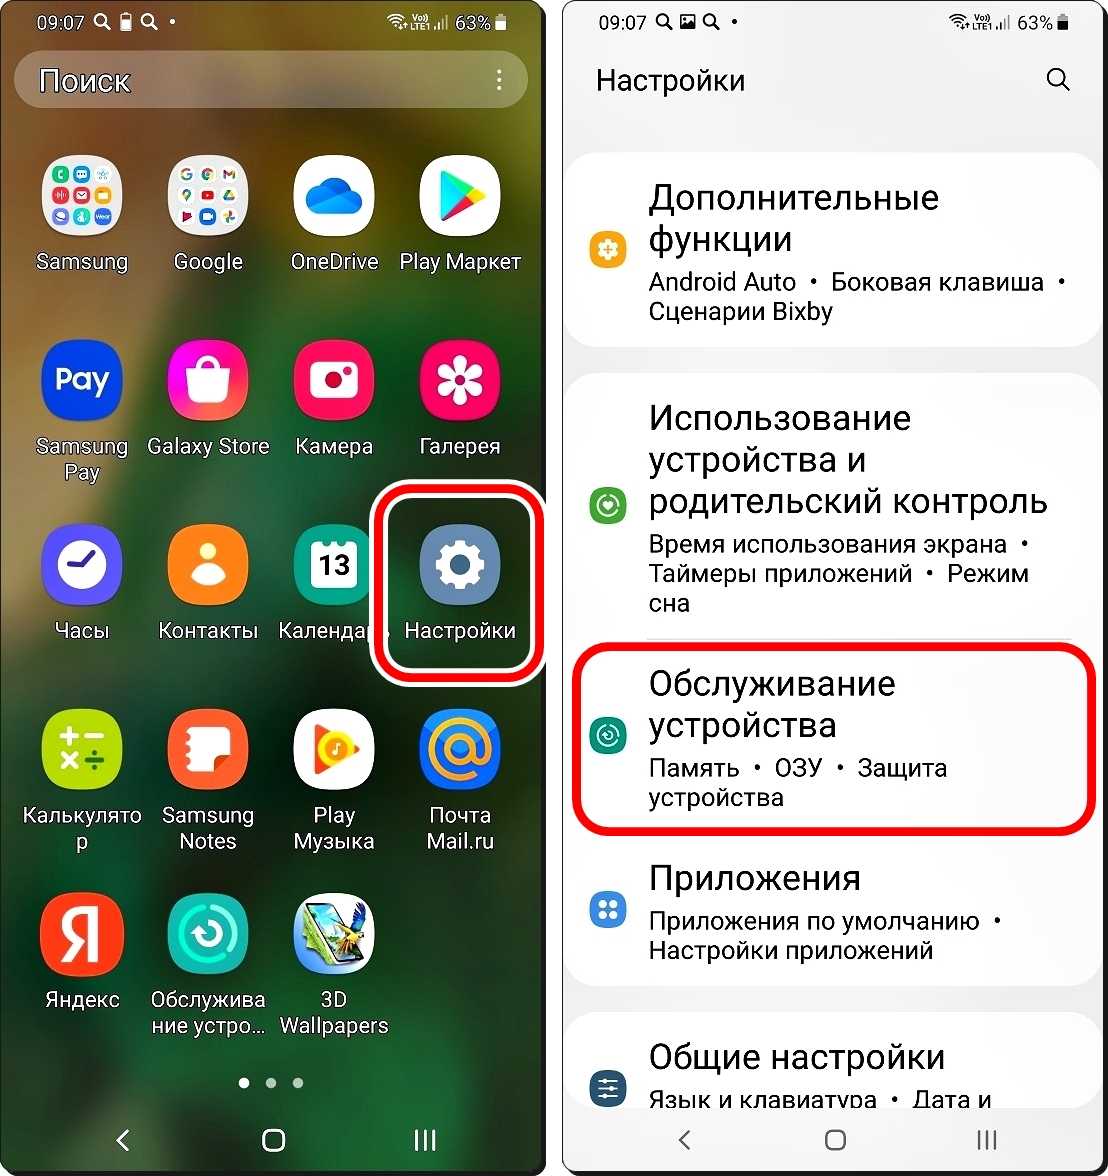 Как телеграмм перевести на русский язык на андроиде телефоне самсунг фото 97